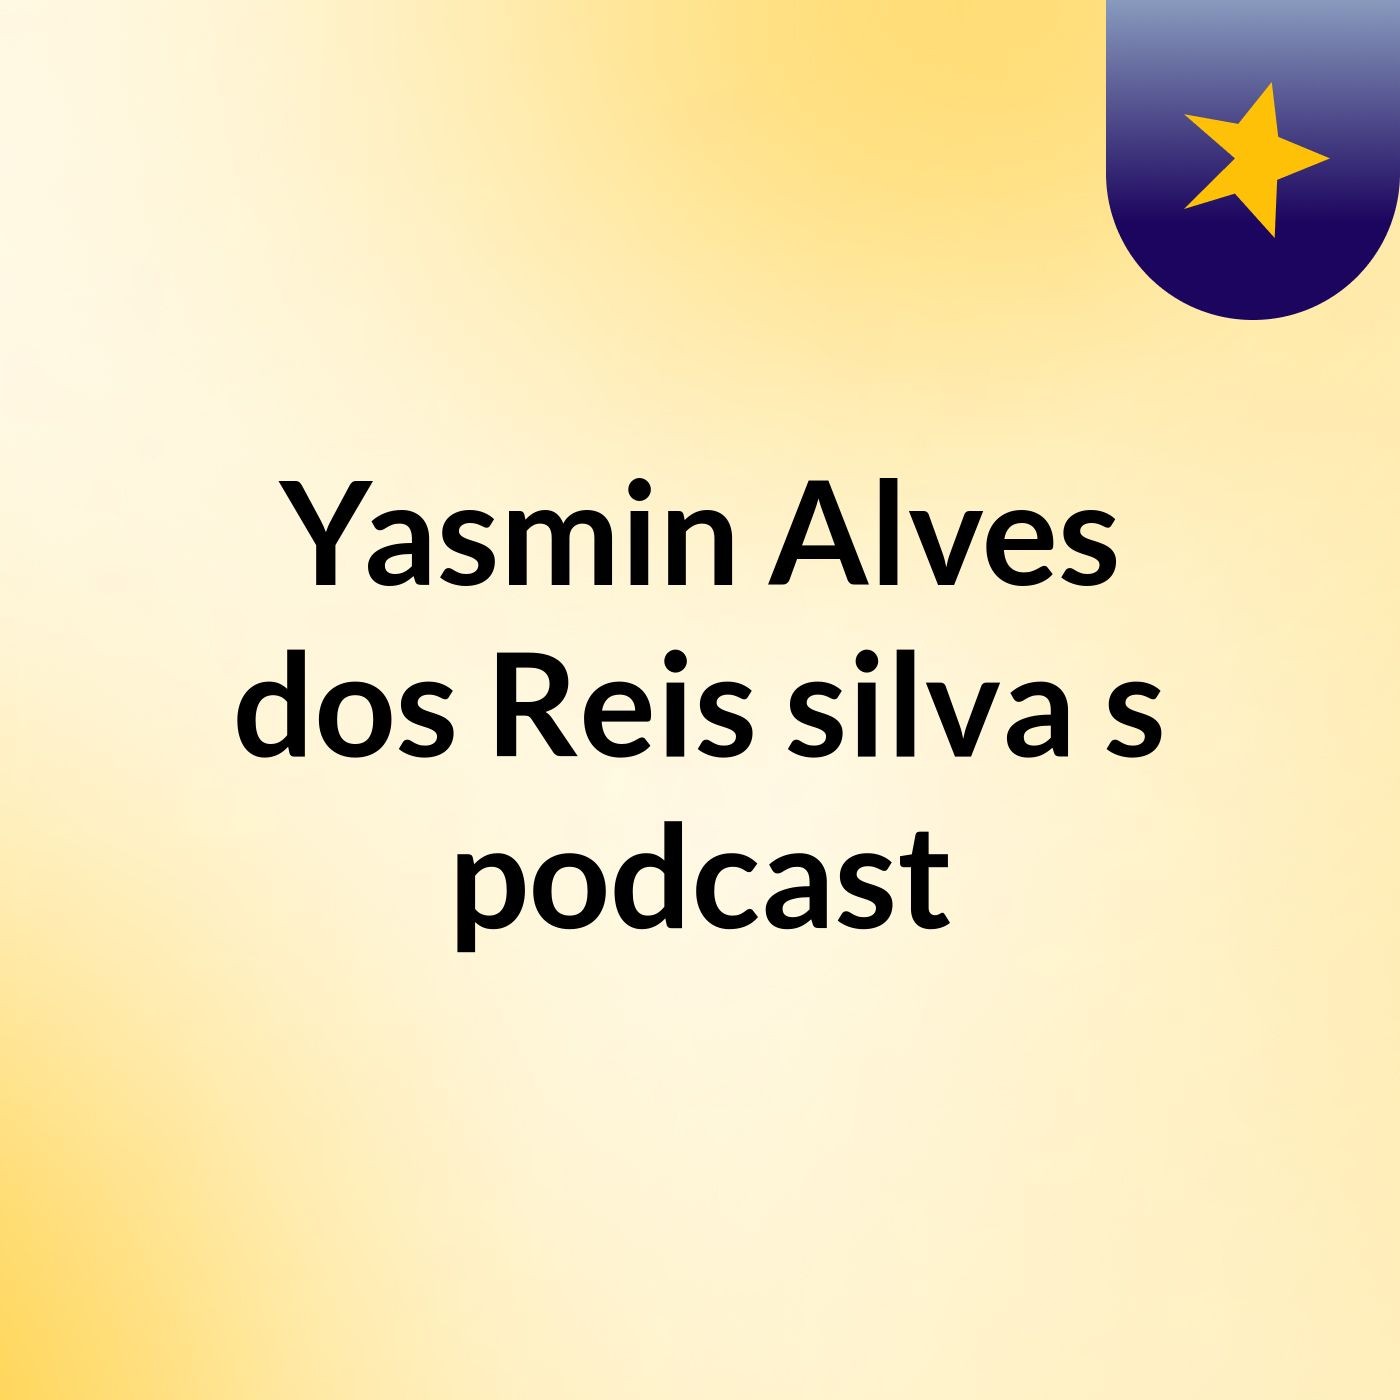 Yasmin Alves dos Reis silva's podcast